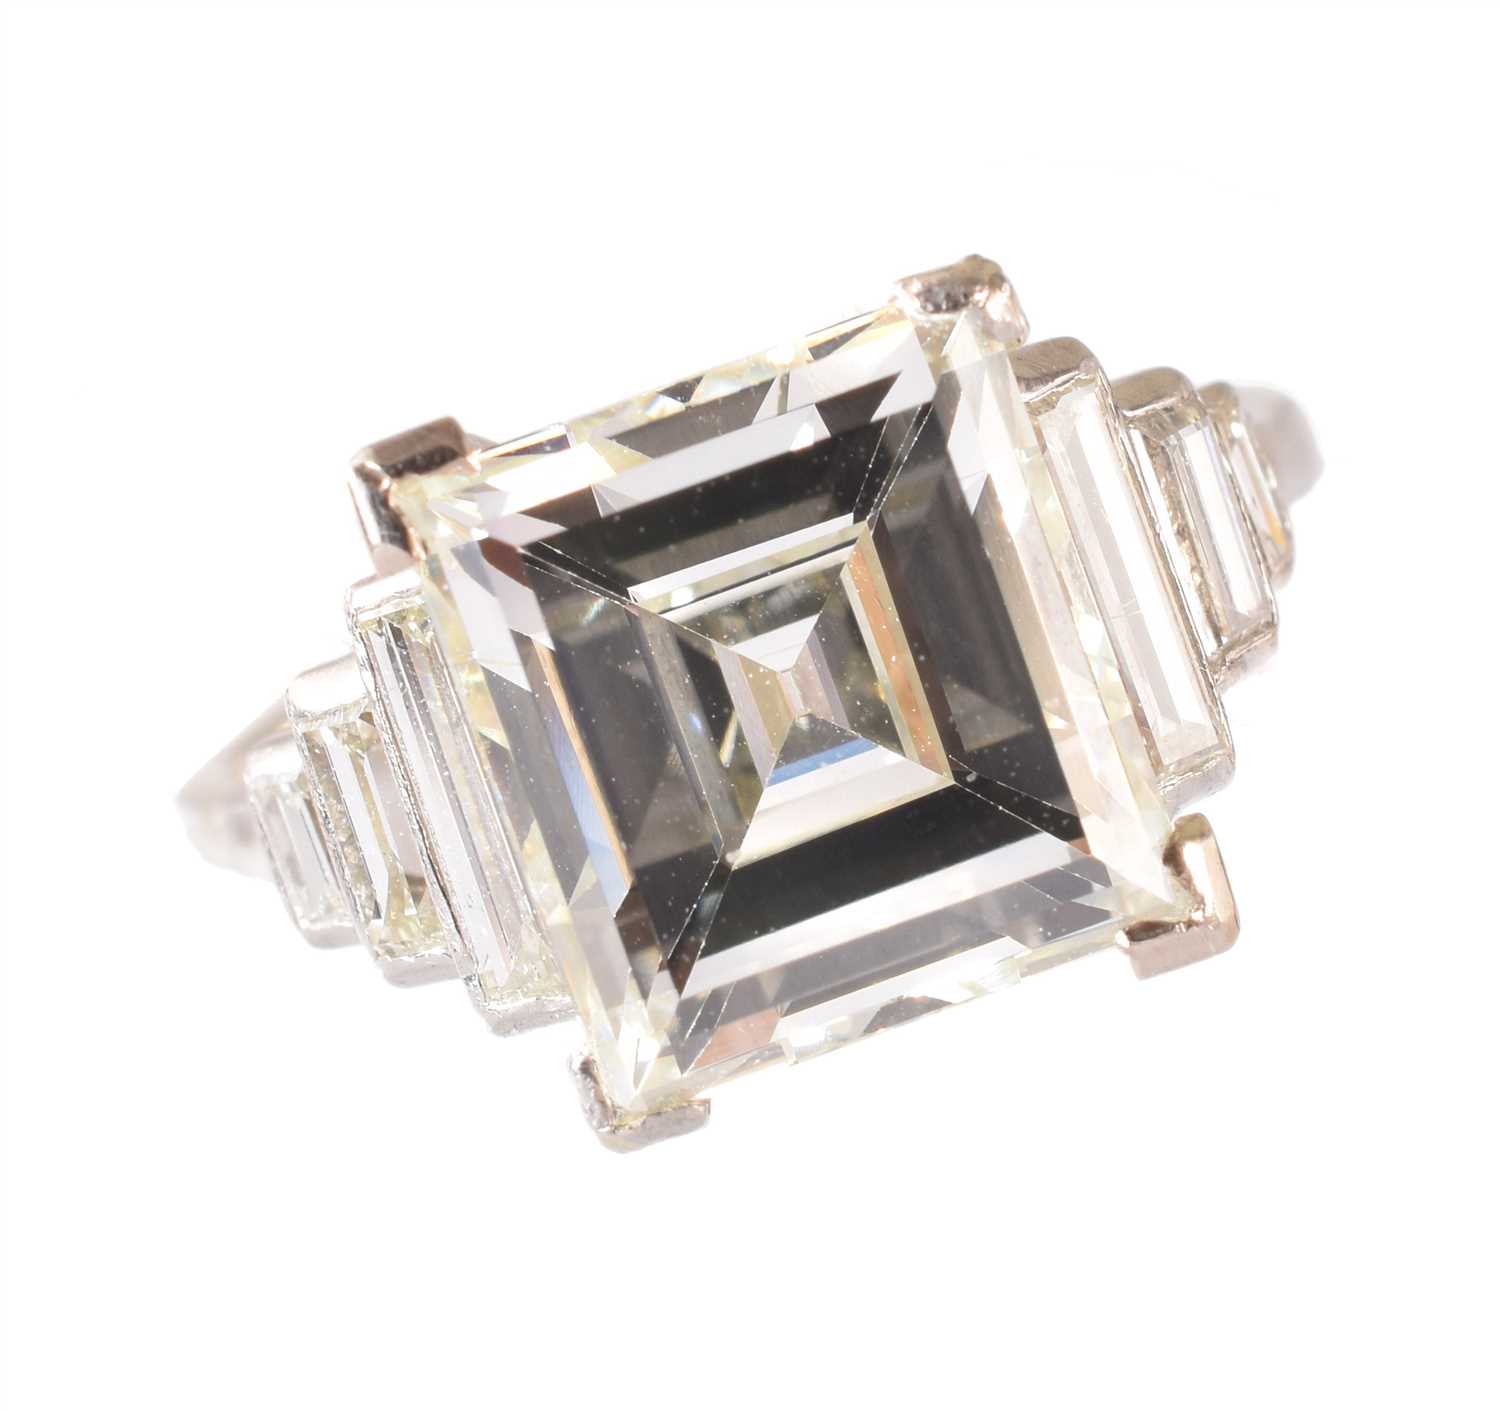 195 - An impressive 18ct gold diamond single stone ring,